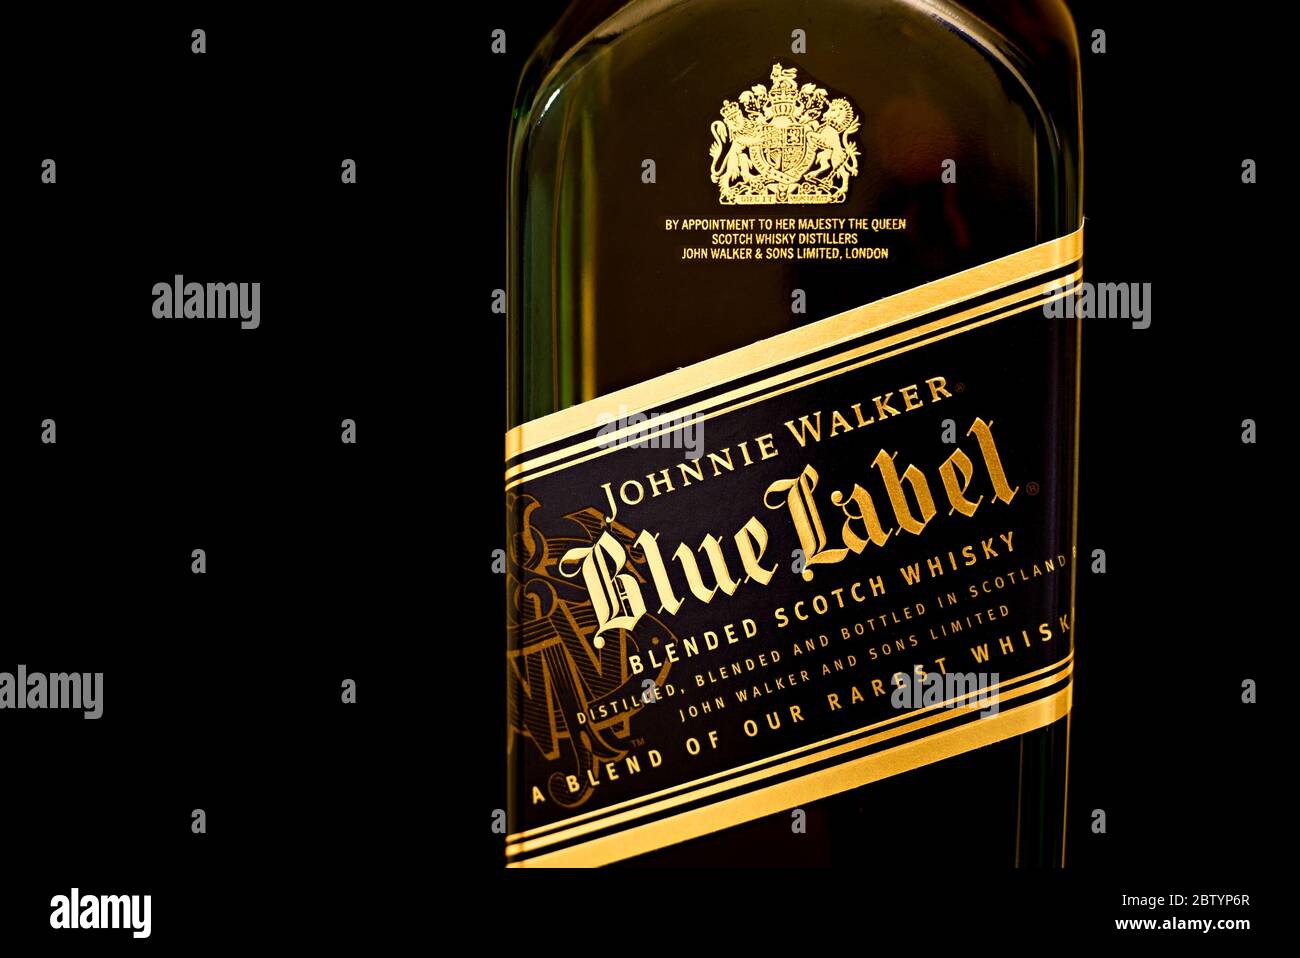 Johnnie Walker Blue Label Bottle on Black Background Showing only the Label Stock Photo